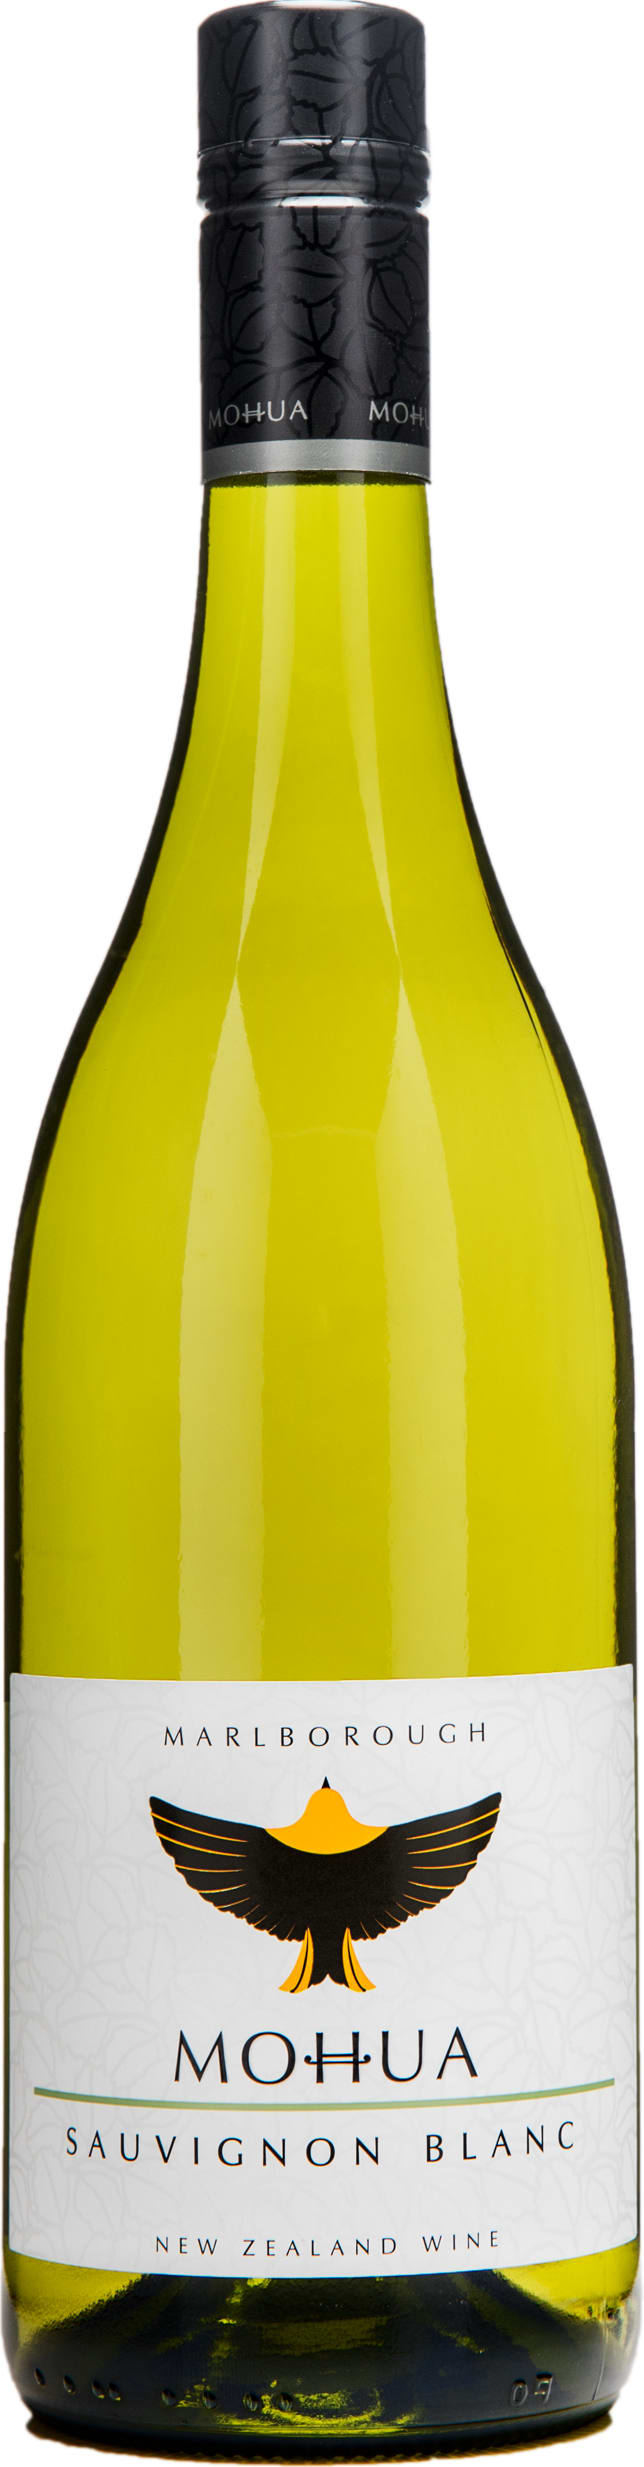 Peregrine Wines Mohua Sauvignon Blanc 2021 75cl - Buy Peregrine Wines Wines from GREAT WINES DIRECT wine shop